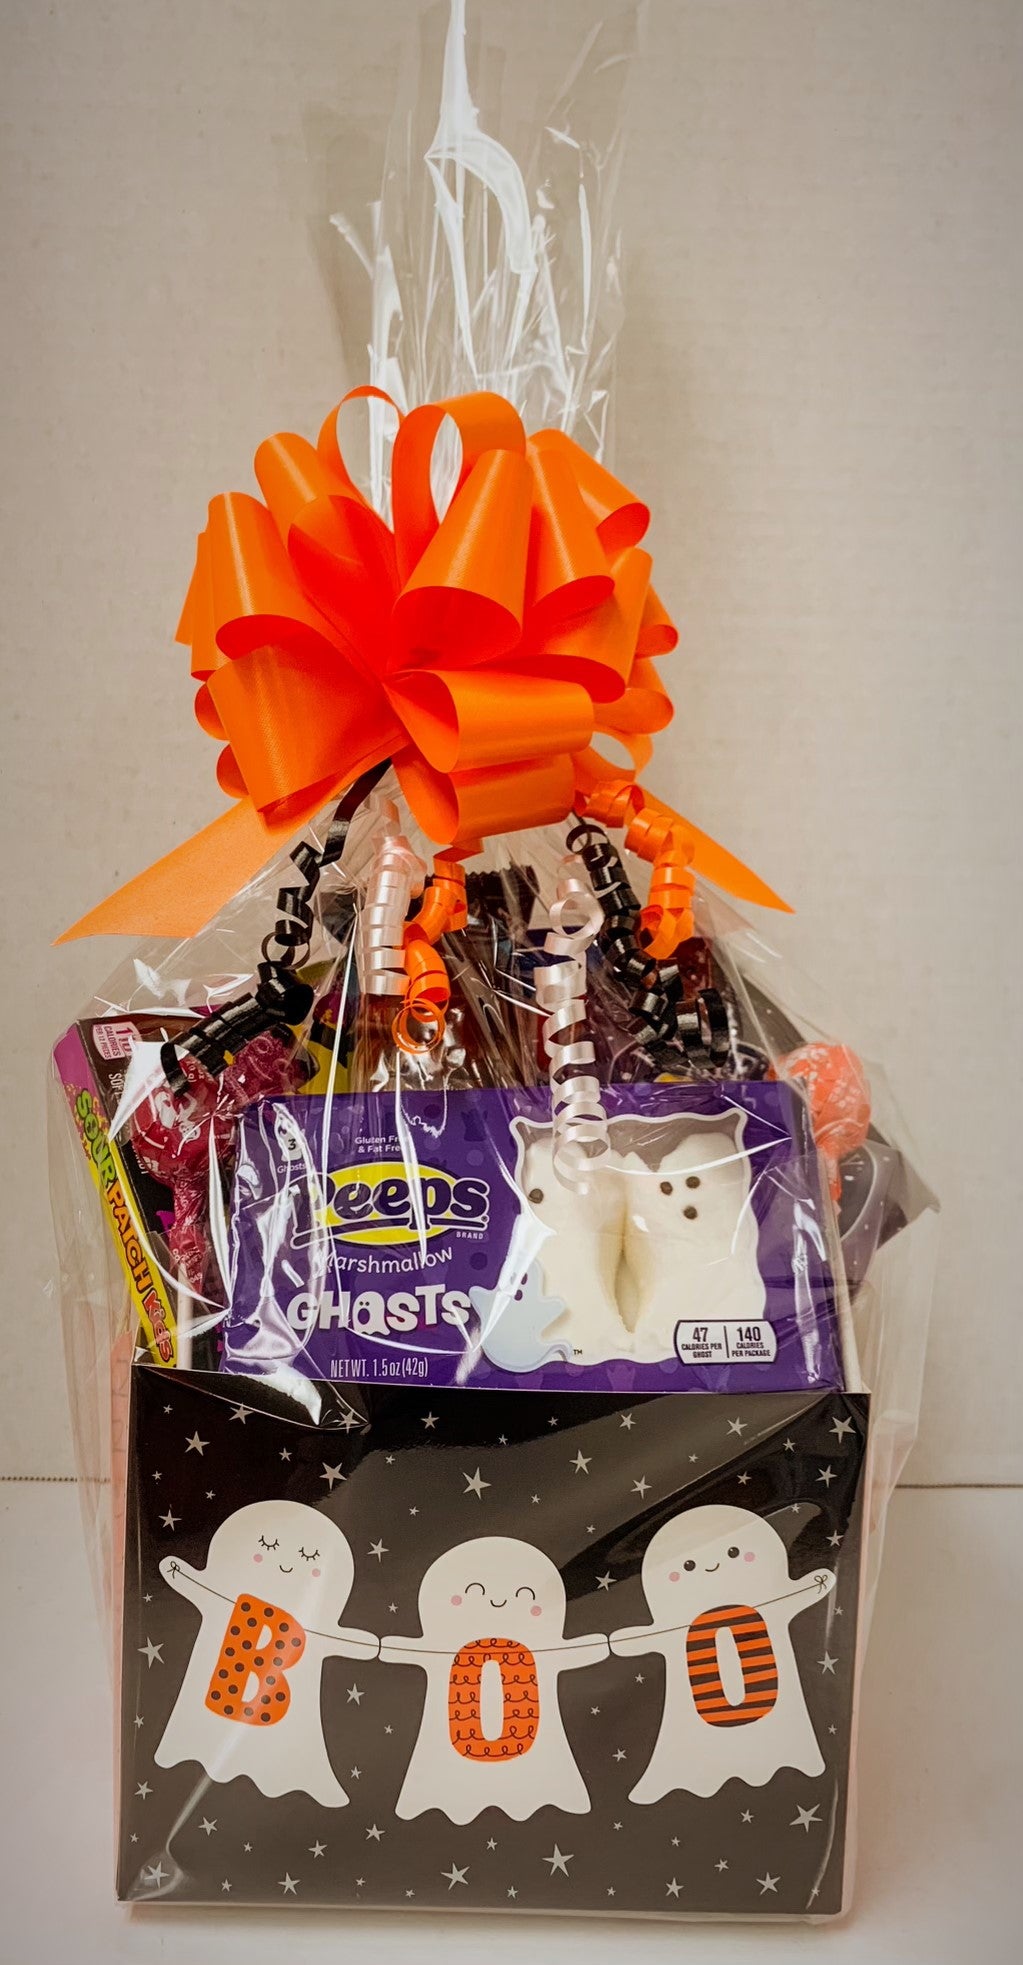 Halloween Boo Basket, Thanksgiving Gifts, Fall Gift Box, Halloween